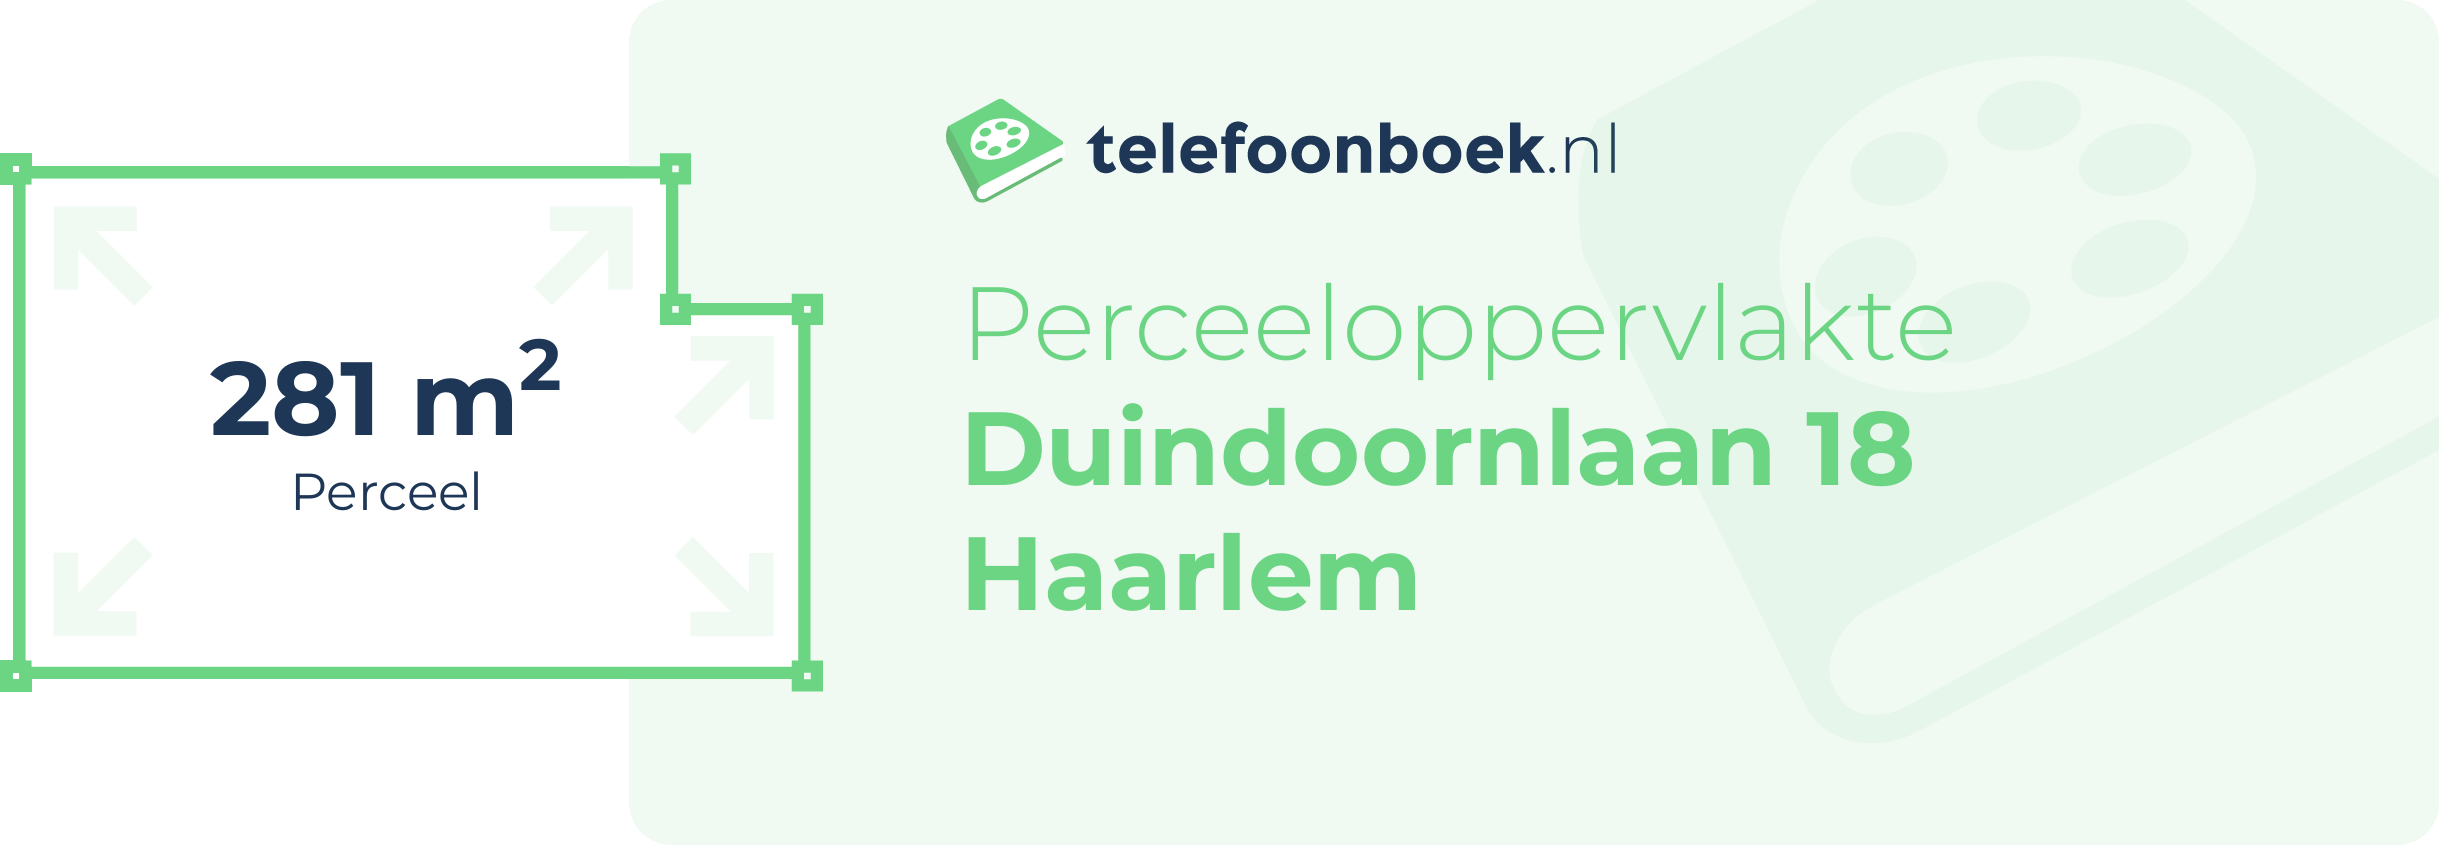 Perceeloppervlakte Duindoornlaan 18 Haarlem